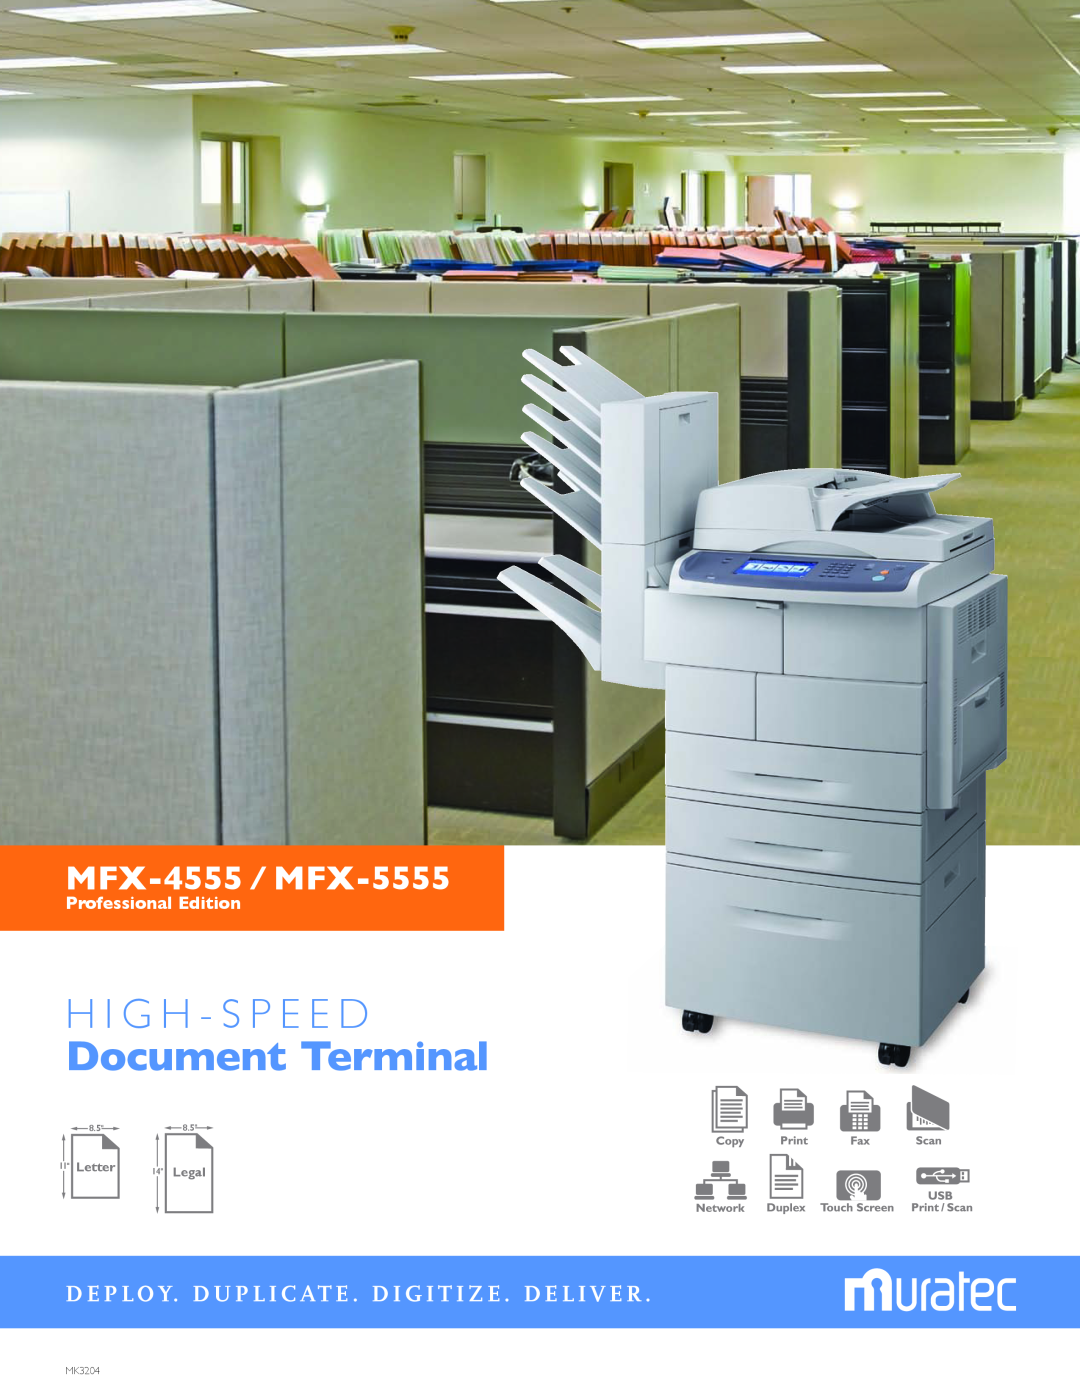 Muratec manual H i g H - S p e e d, Document Terminal, MFX-4555 / MFX-5555, Professional Edition, Letter, Legal, MK3204 